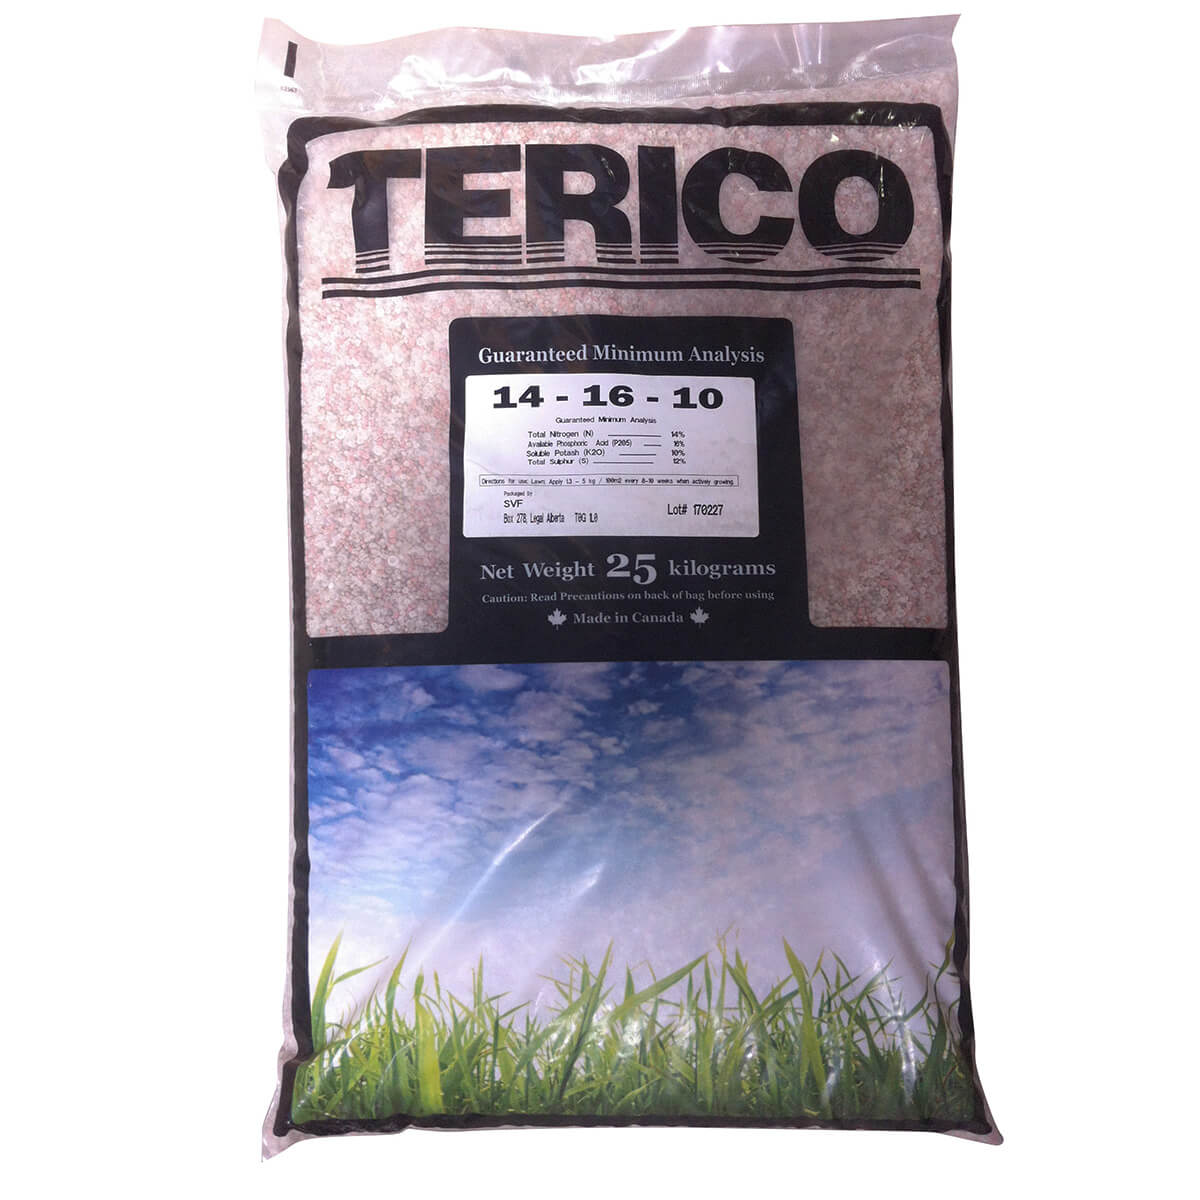 14-16-10 Terico Fall Lawn Fertilizer - 25 kg